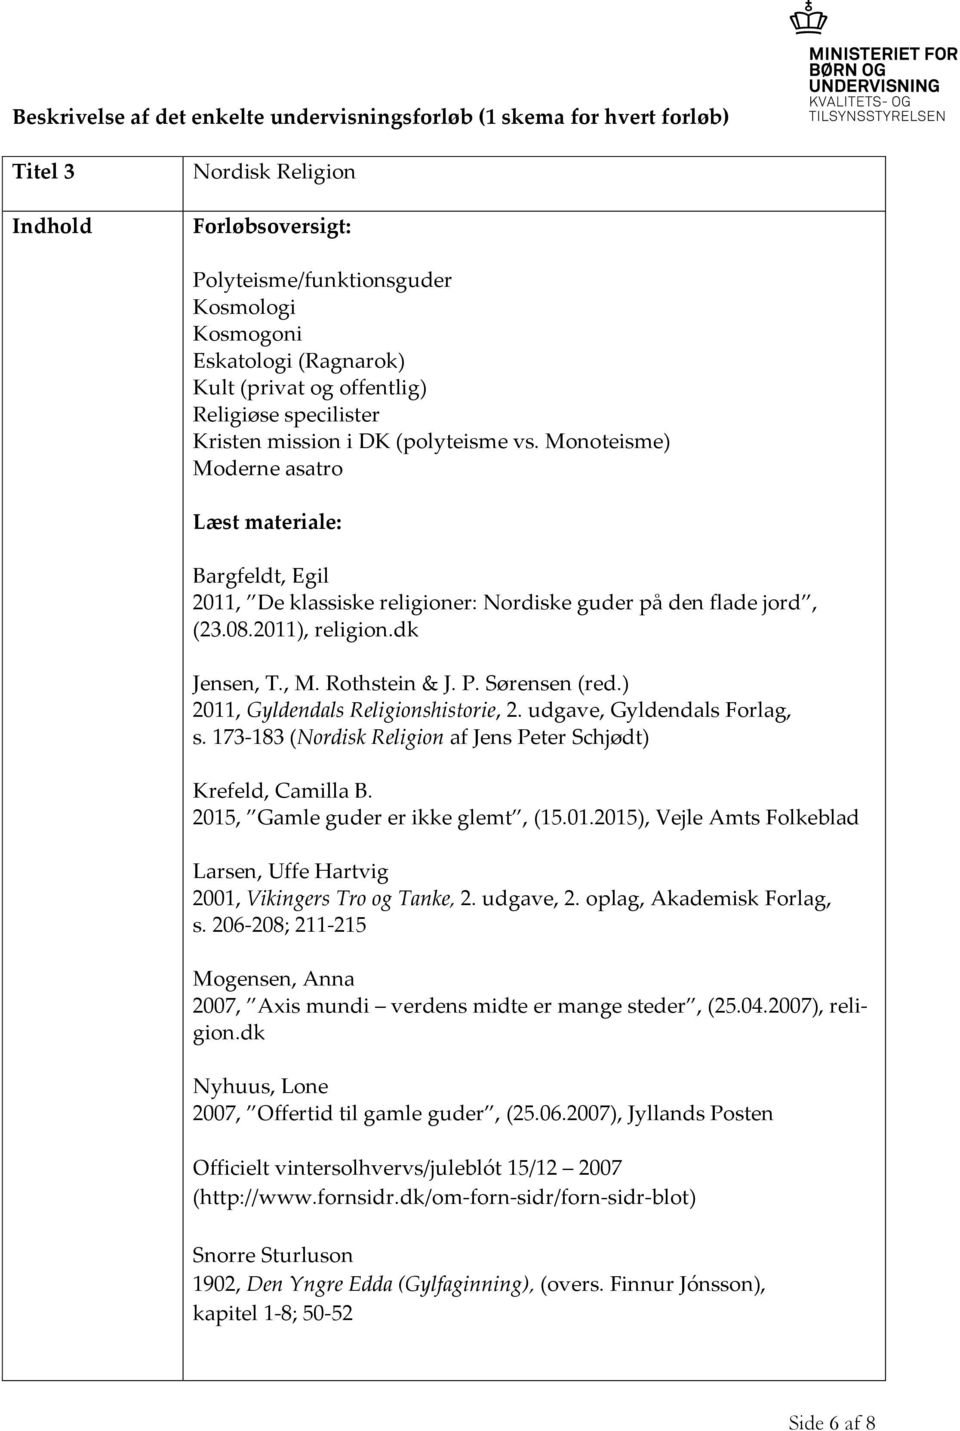 Monoteisme) Moderne asatro Læst materiale: Bargfeldt, Egil 2011, De klassiske religioner: Nordiske guder på den flade jord, (23.08.2011), religion.dk Jensen, T., M. Rothstein & J. P. Sørensen (red.